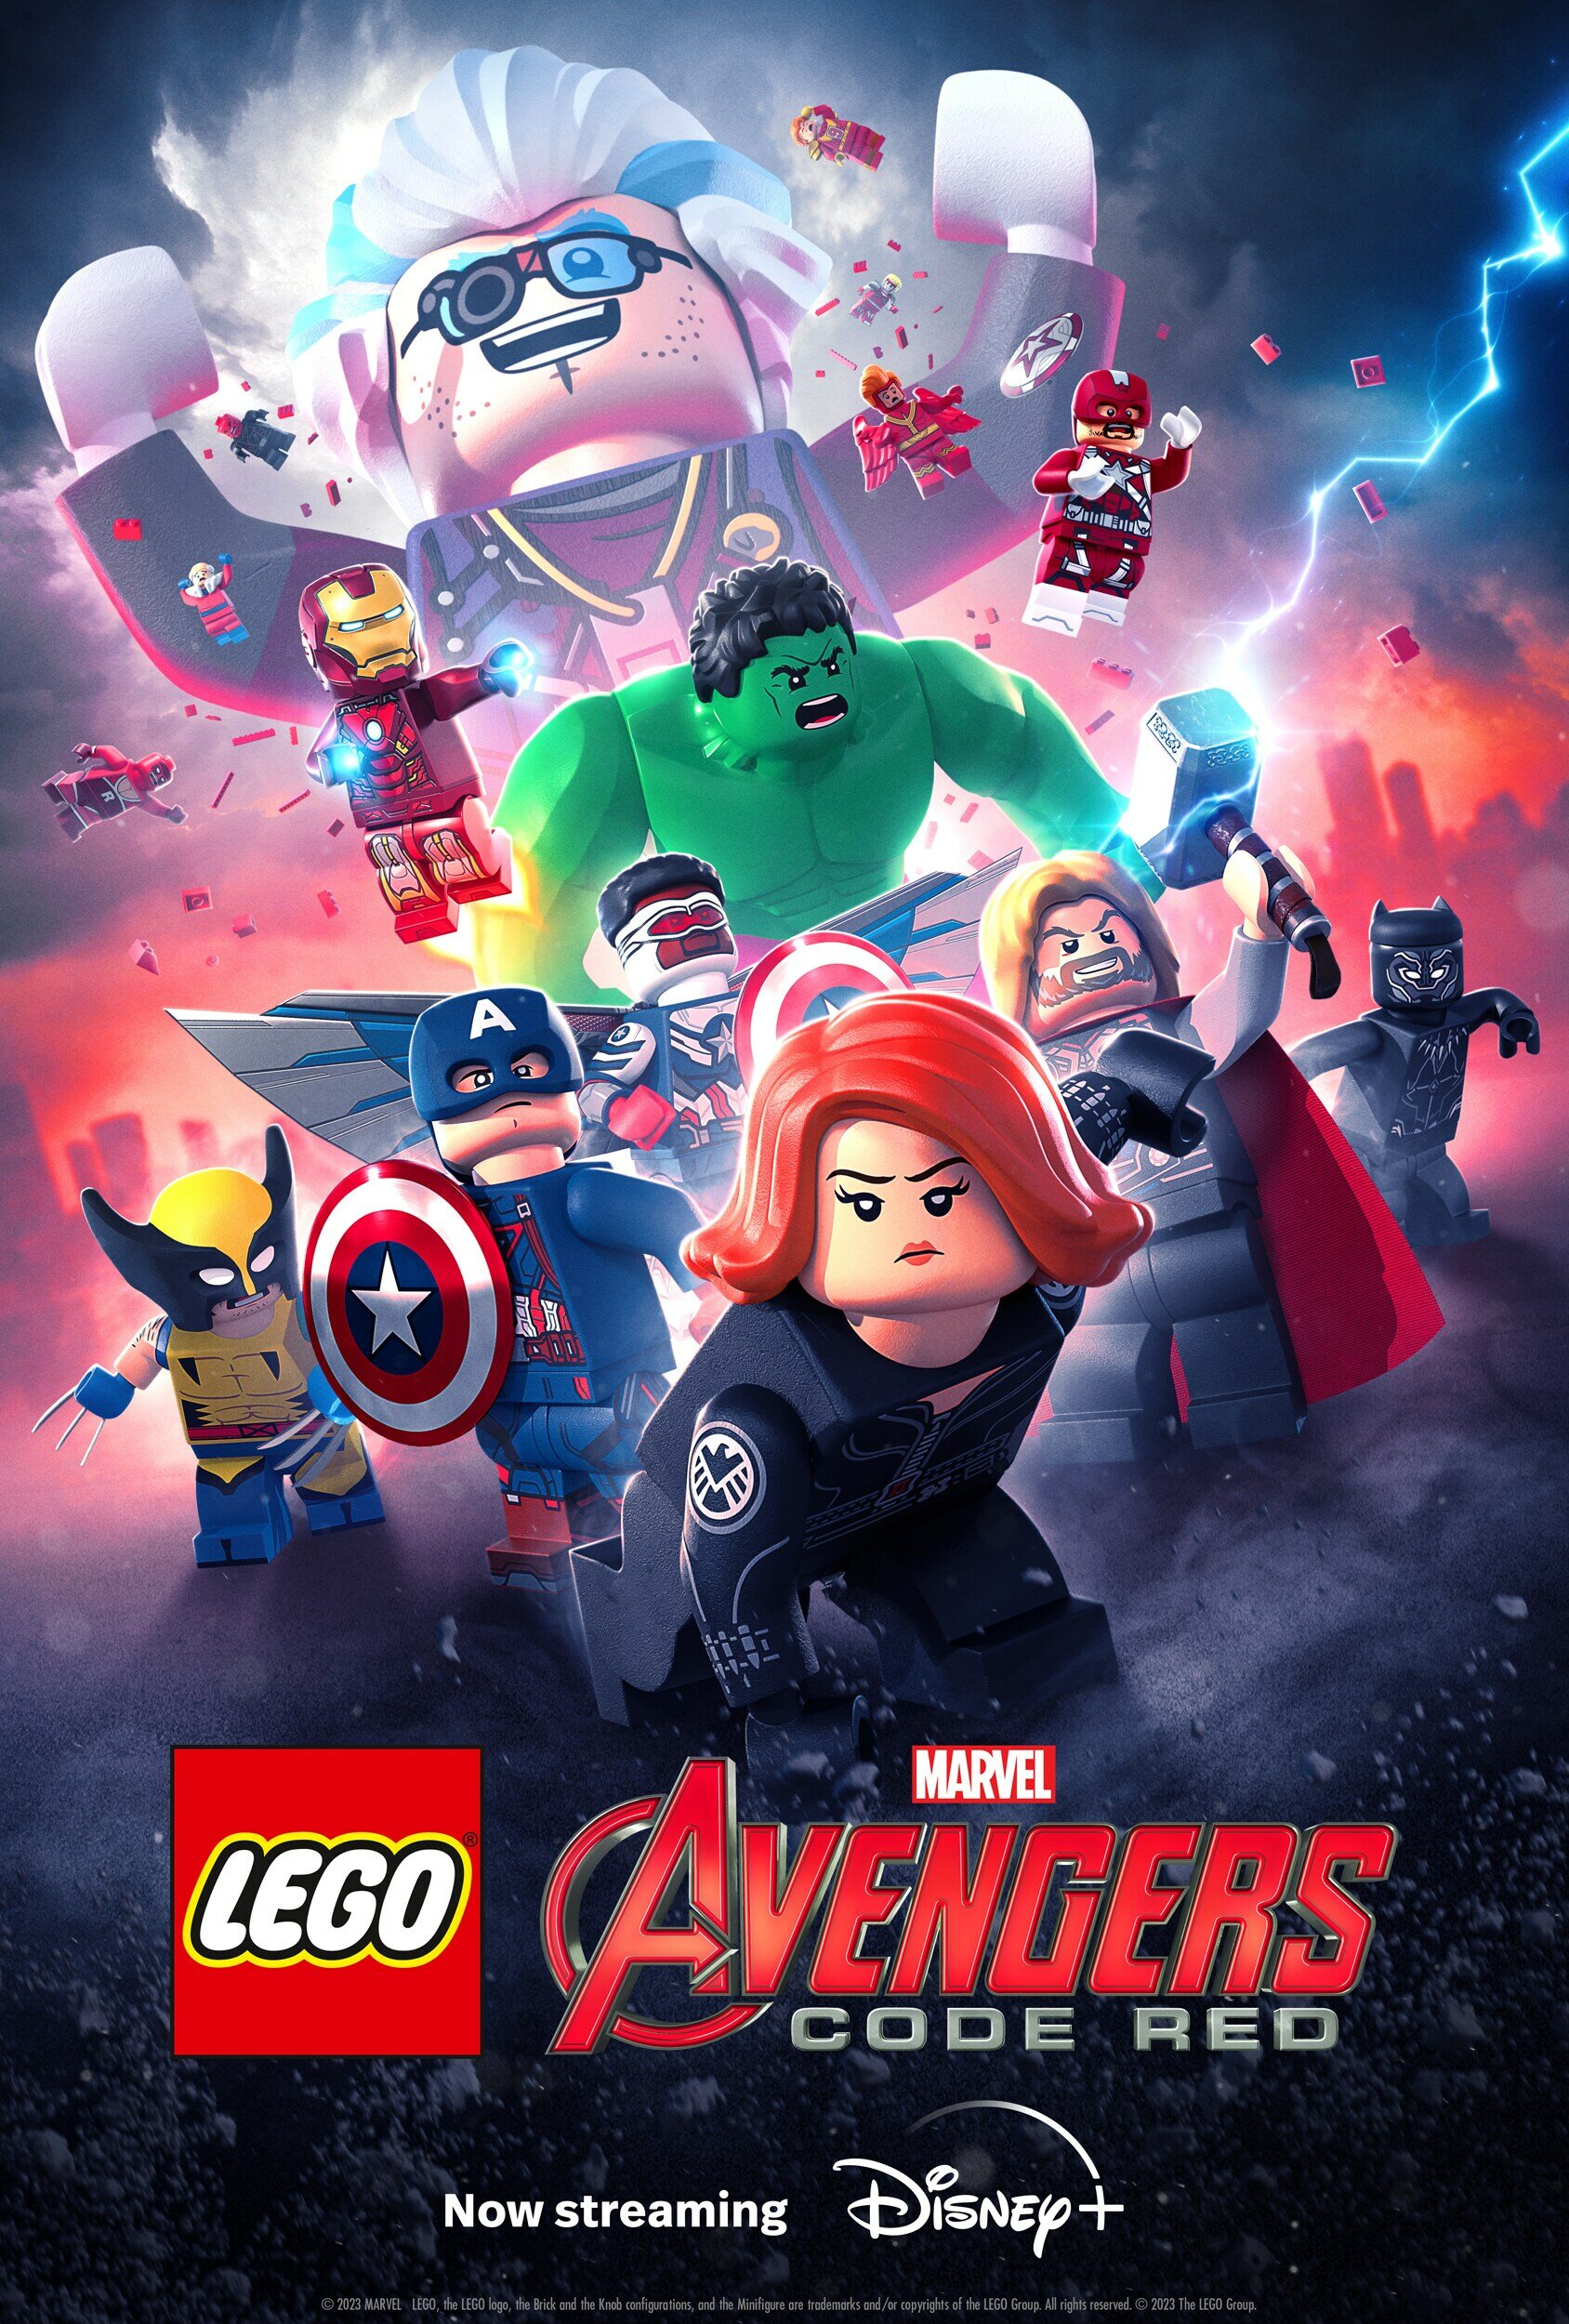 LEGO Marvel Avengers ne zaman